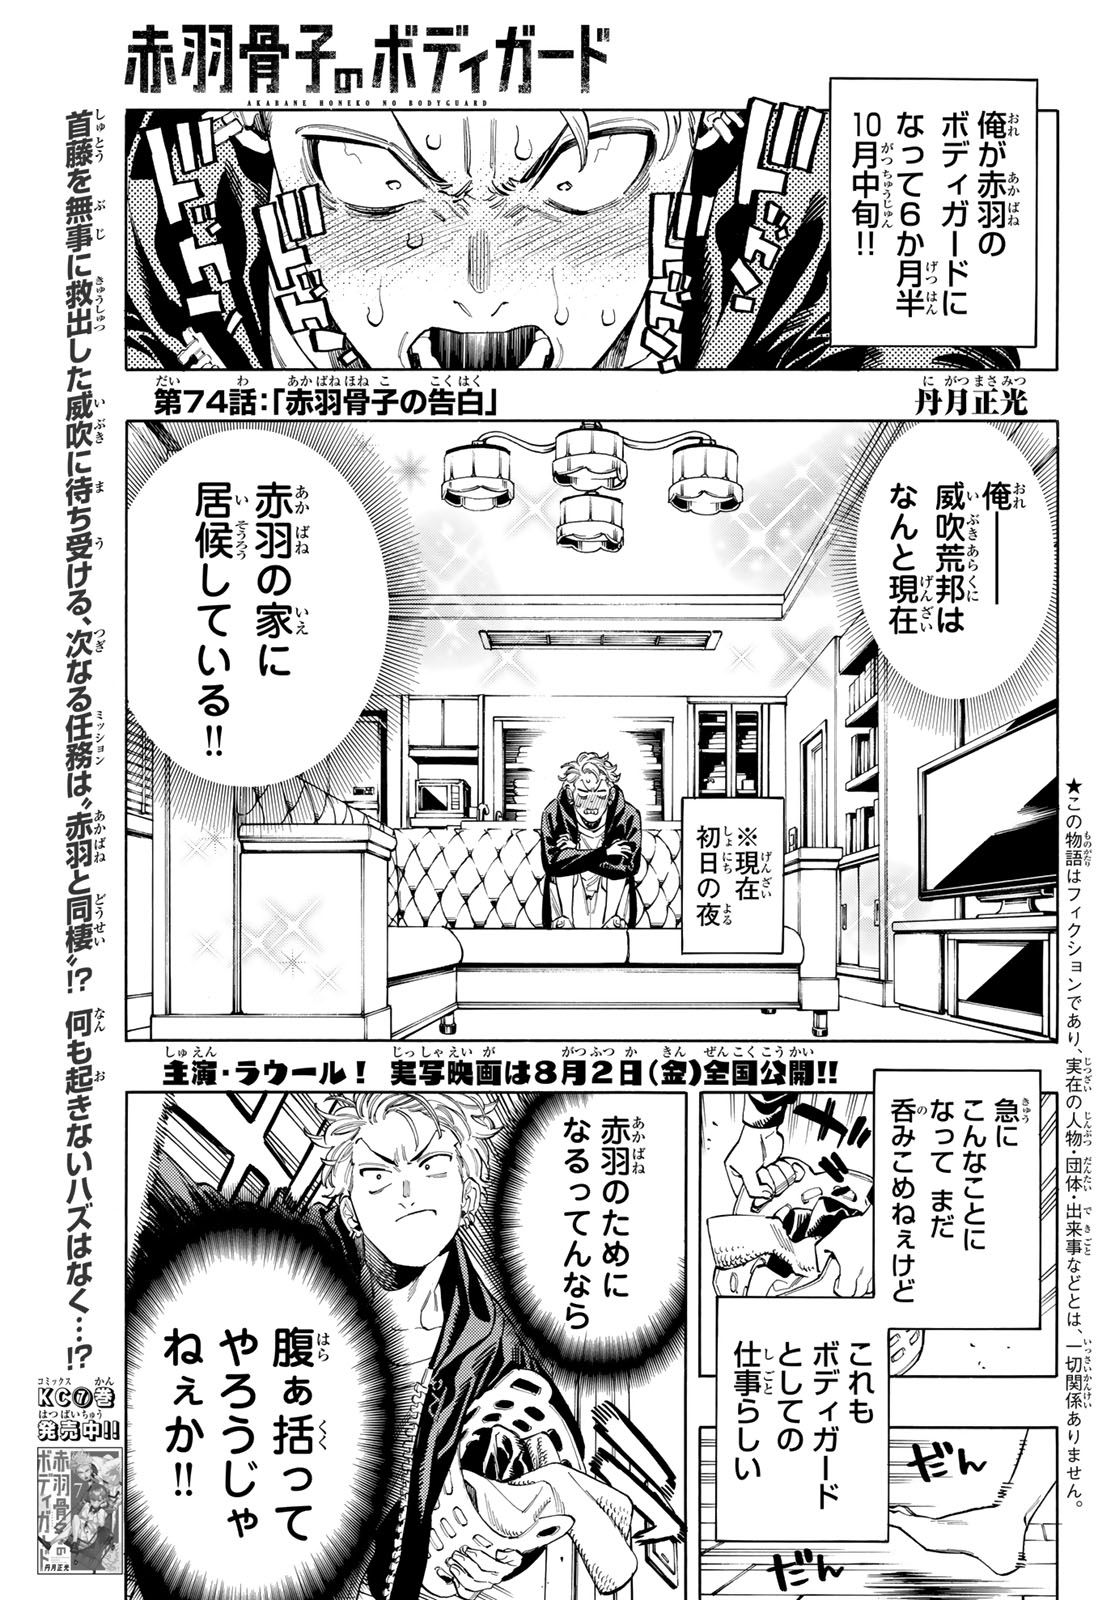 Akabane Honeko no Bodyguard - Chapter 74 - Page 1